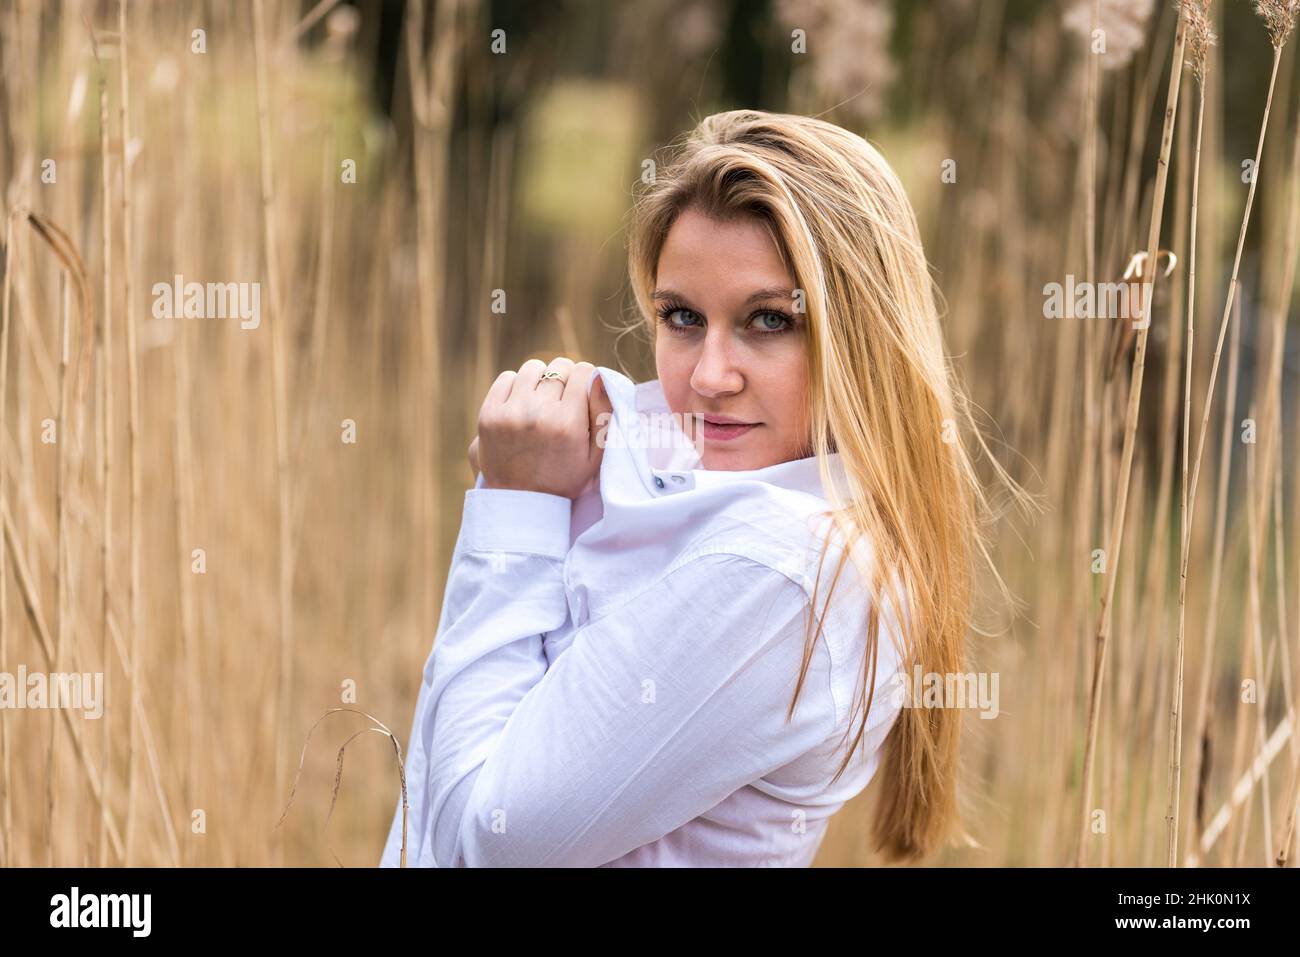 Jette, Brussels, Belgium, 03 14 2018: White model with long sleek blonde hair posingin a nature park. Stock Photo